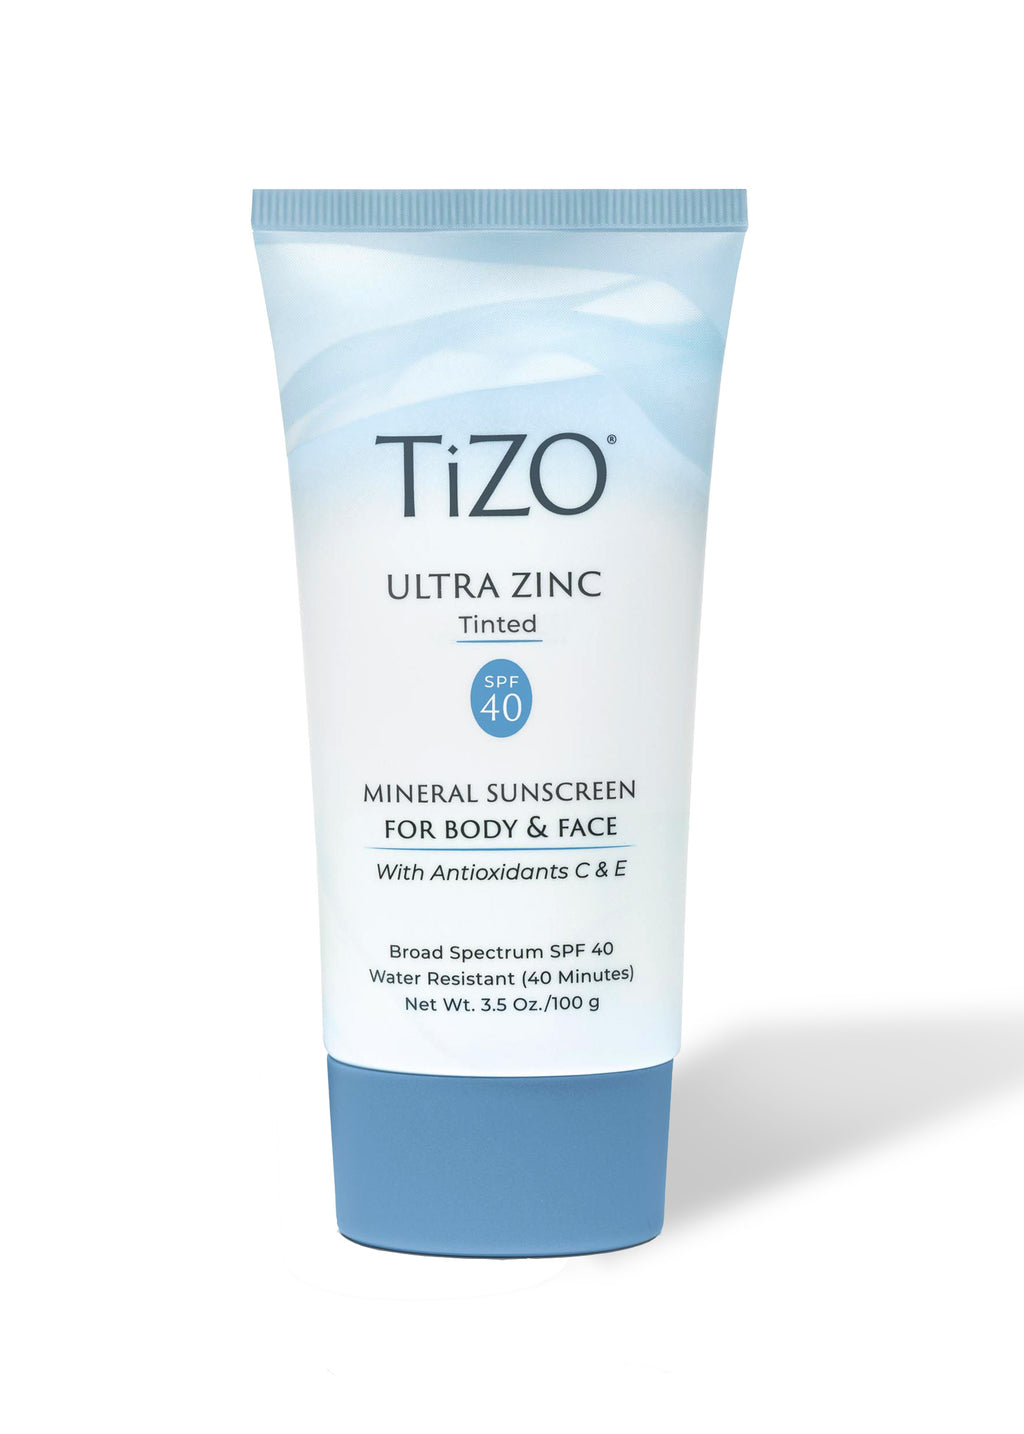 TiZO ultra zinc tinted